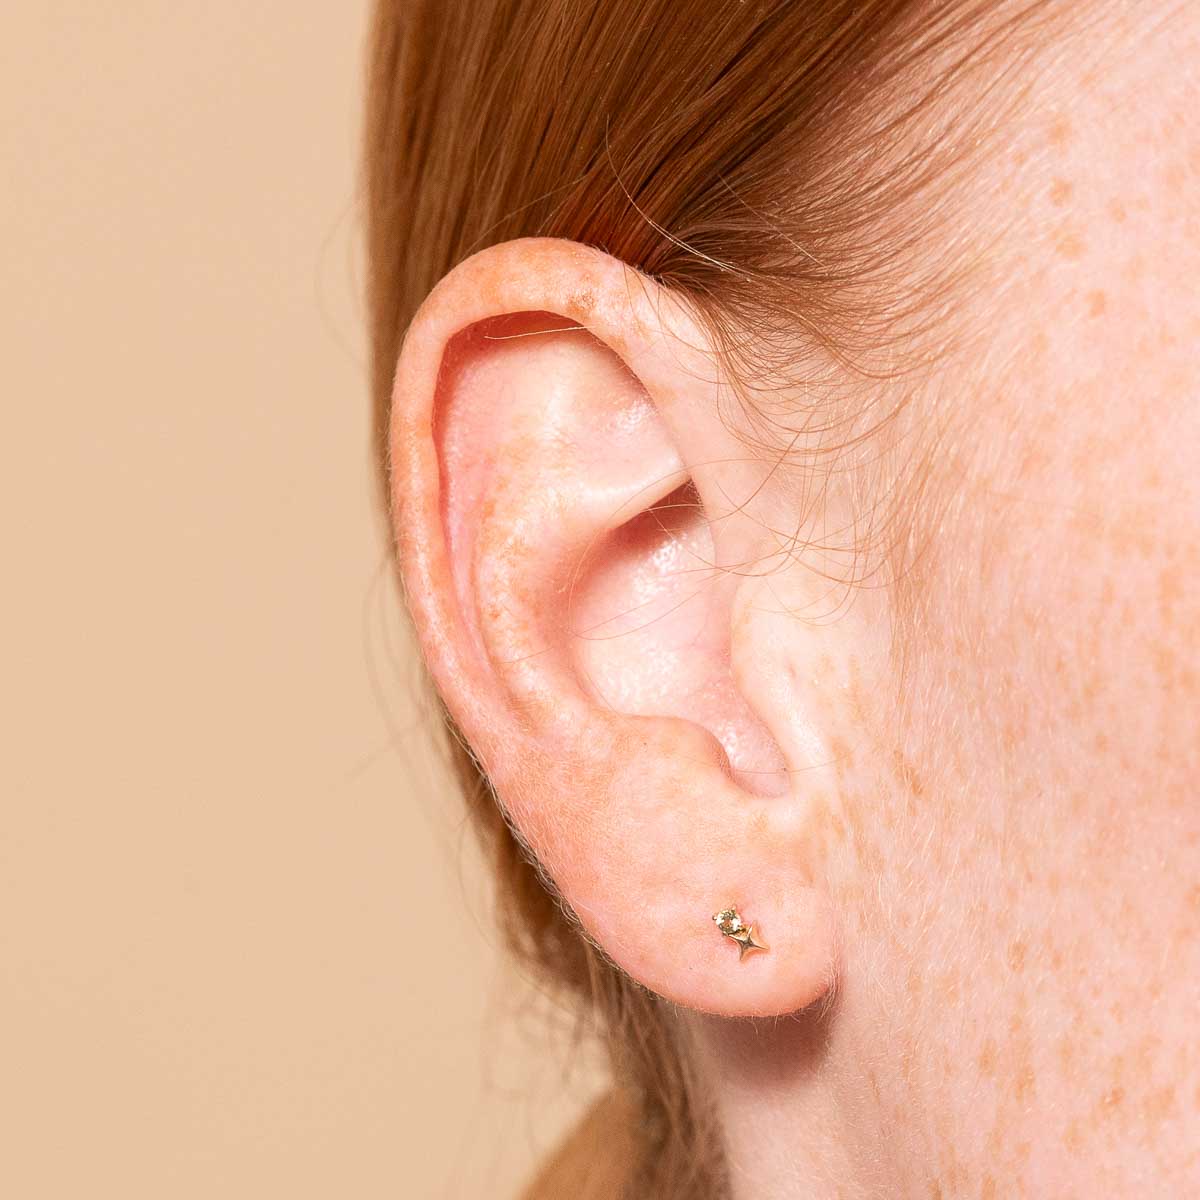 November Birthstone Earrings in Solid Gold